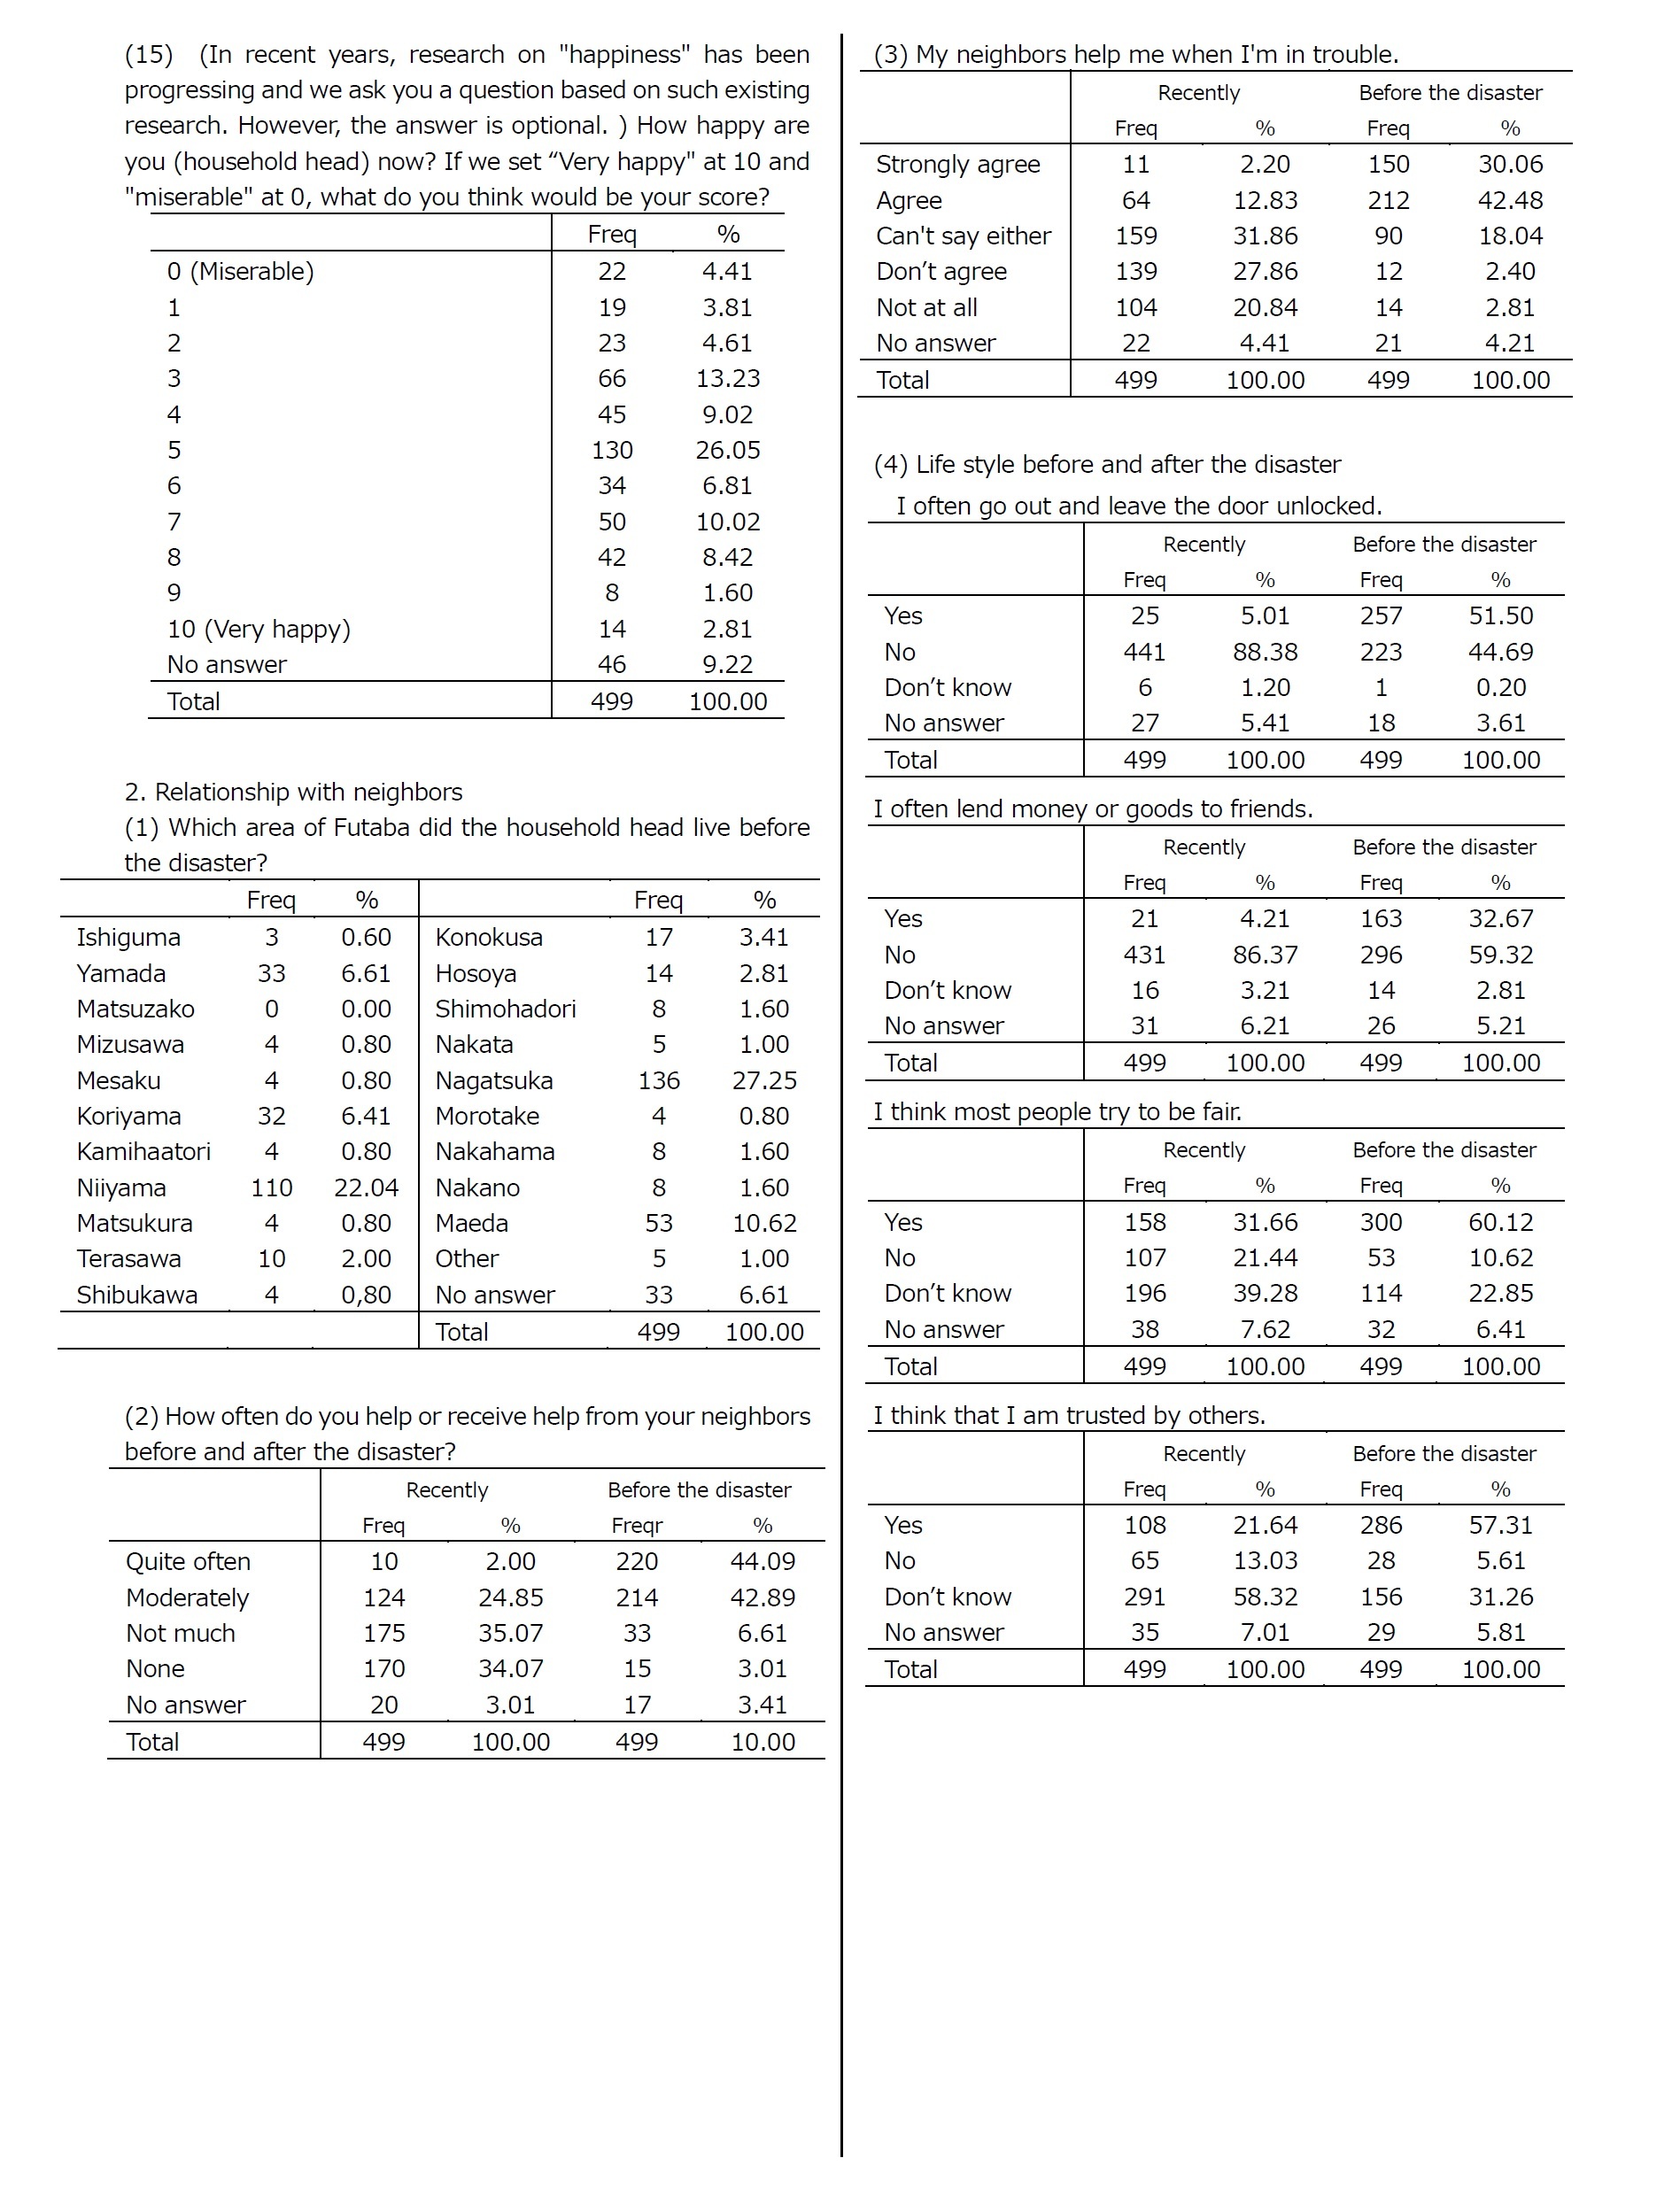 Appendix: Summary Tables3